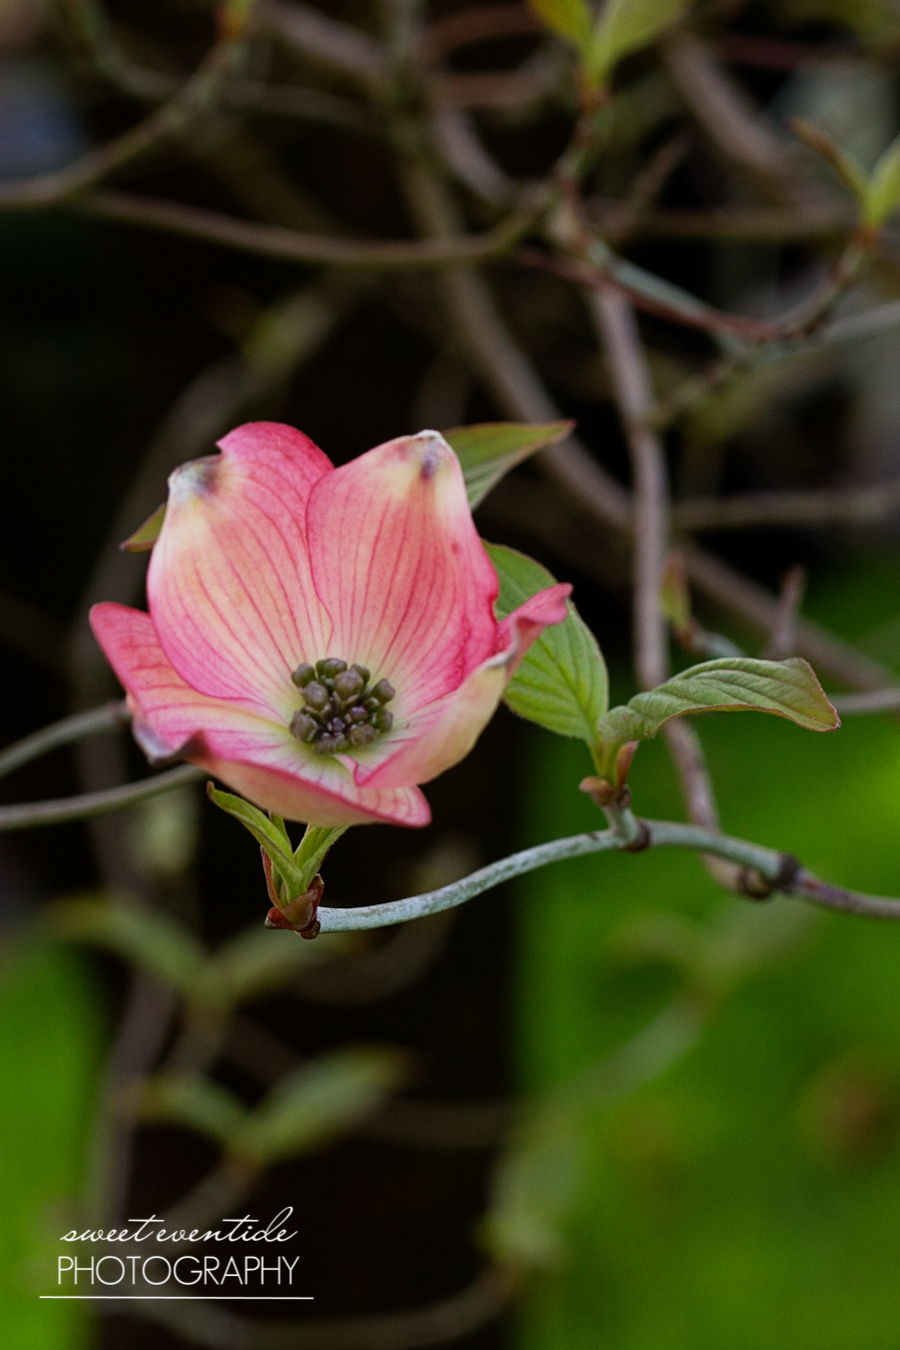 Dogwood Tree Pink Flowers Portland Photograph by Jessica Nichols Sweet Eventide Photography